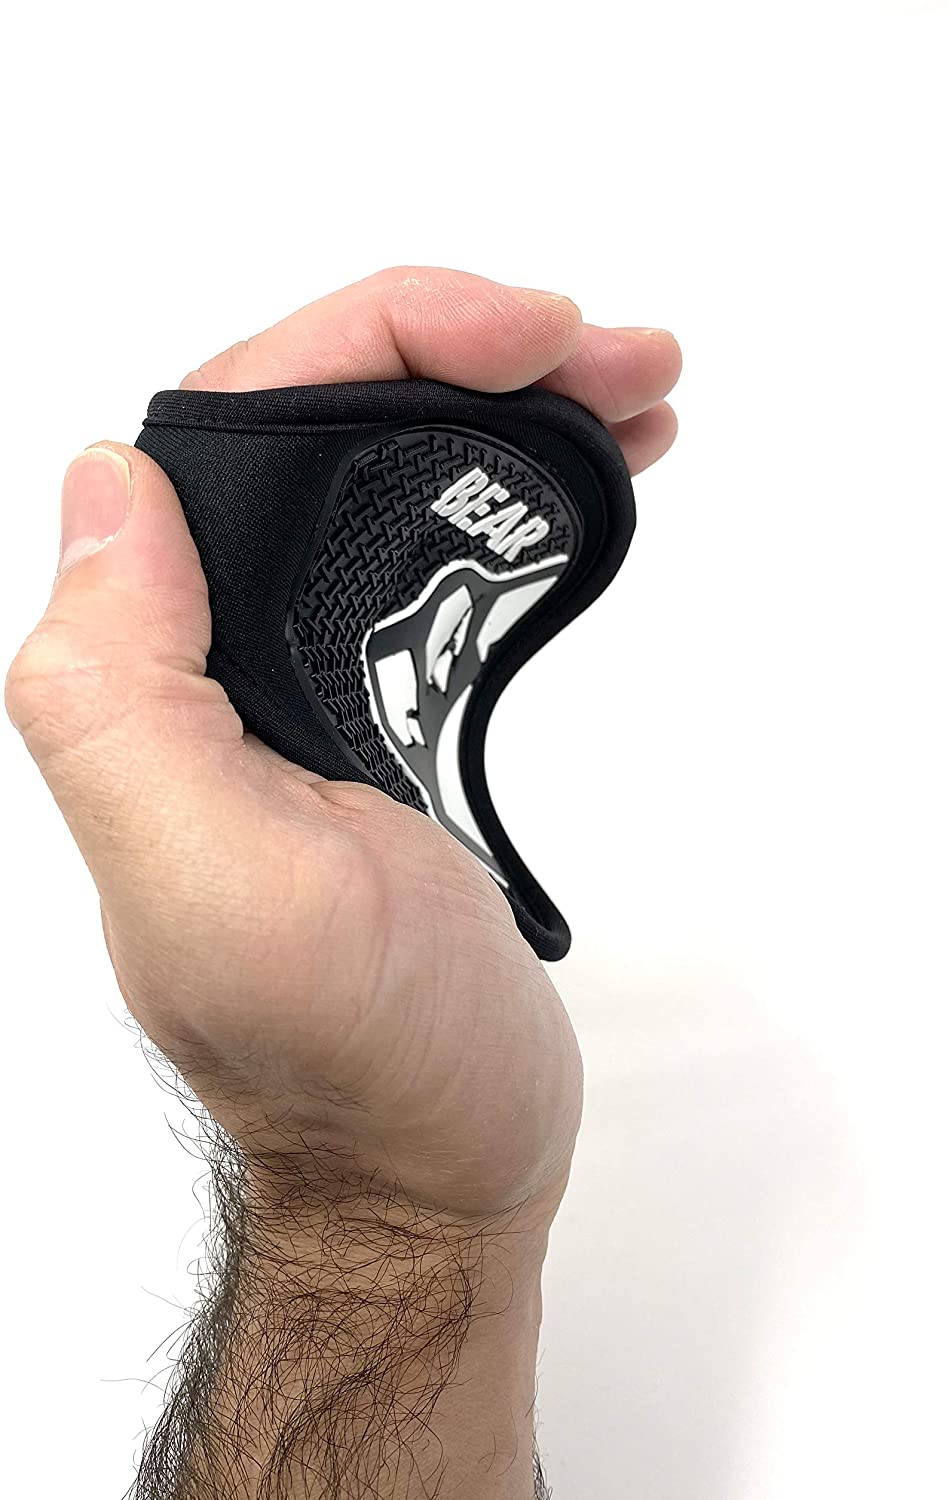 Bear Grip® (Neoprene) - Hygienic alternative to weight lifting gym gloves